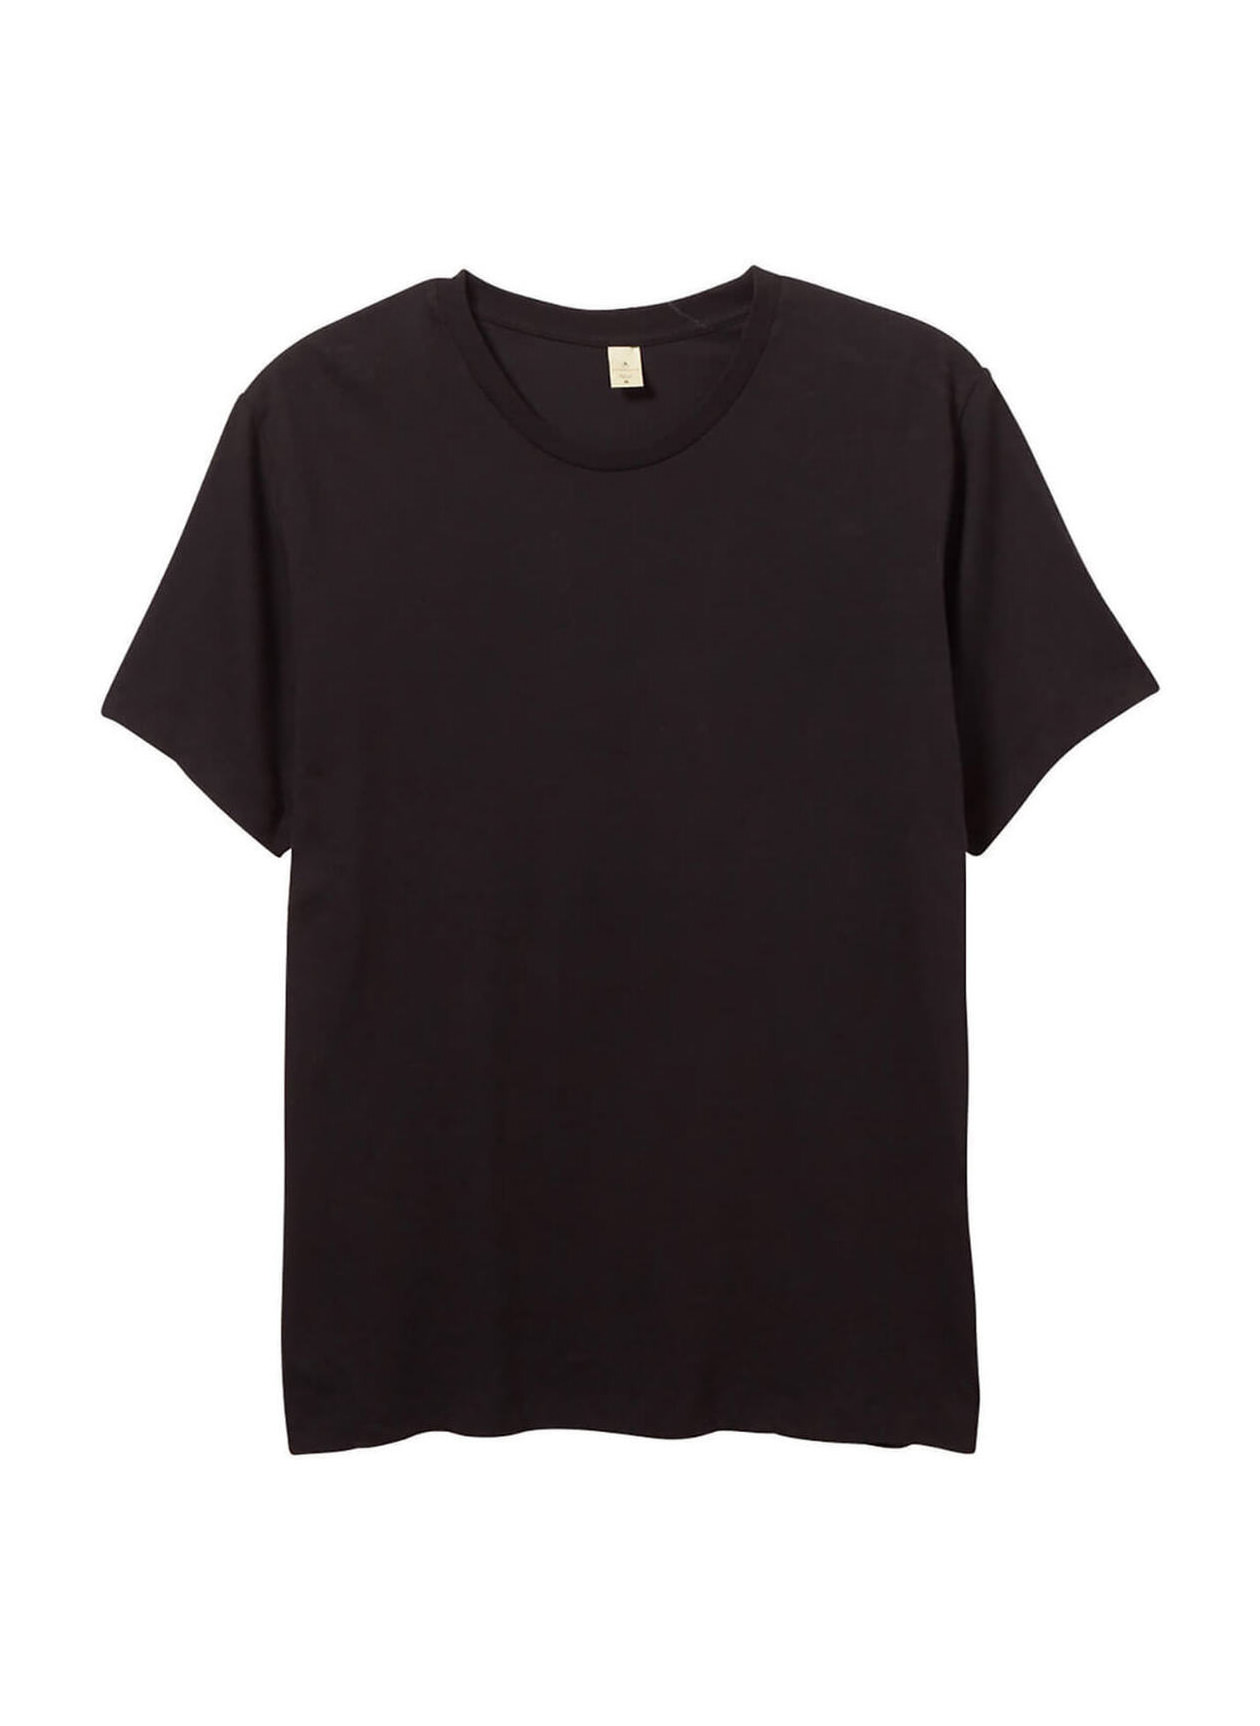 Alternative Men's Black Go-To T-Shirt